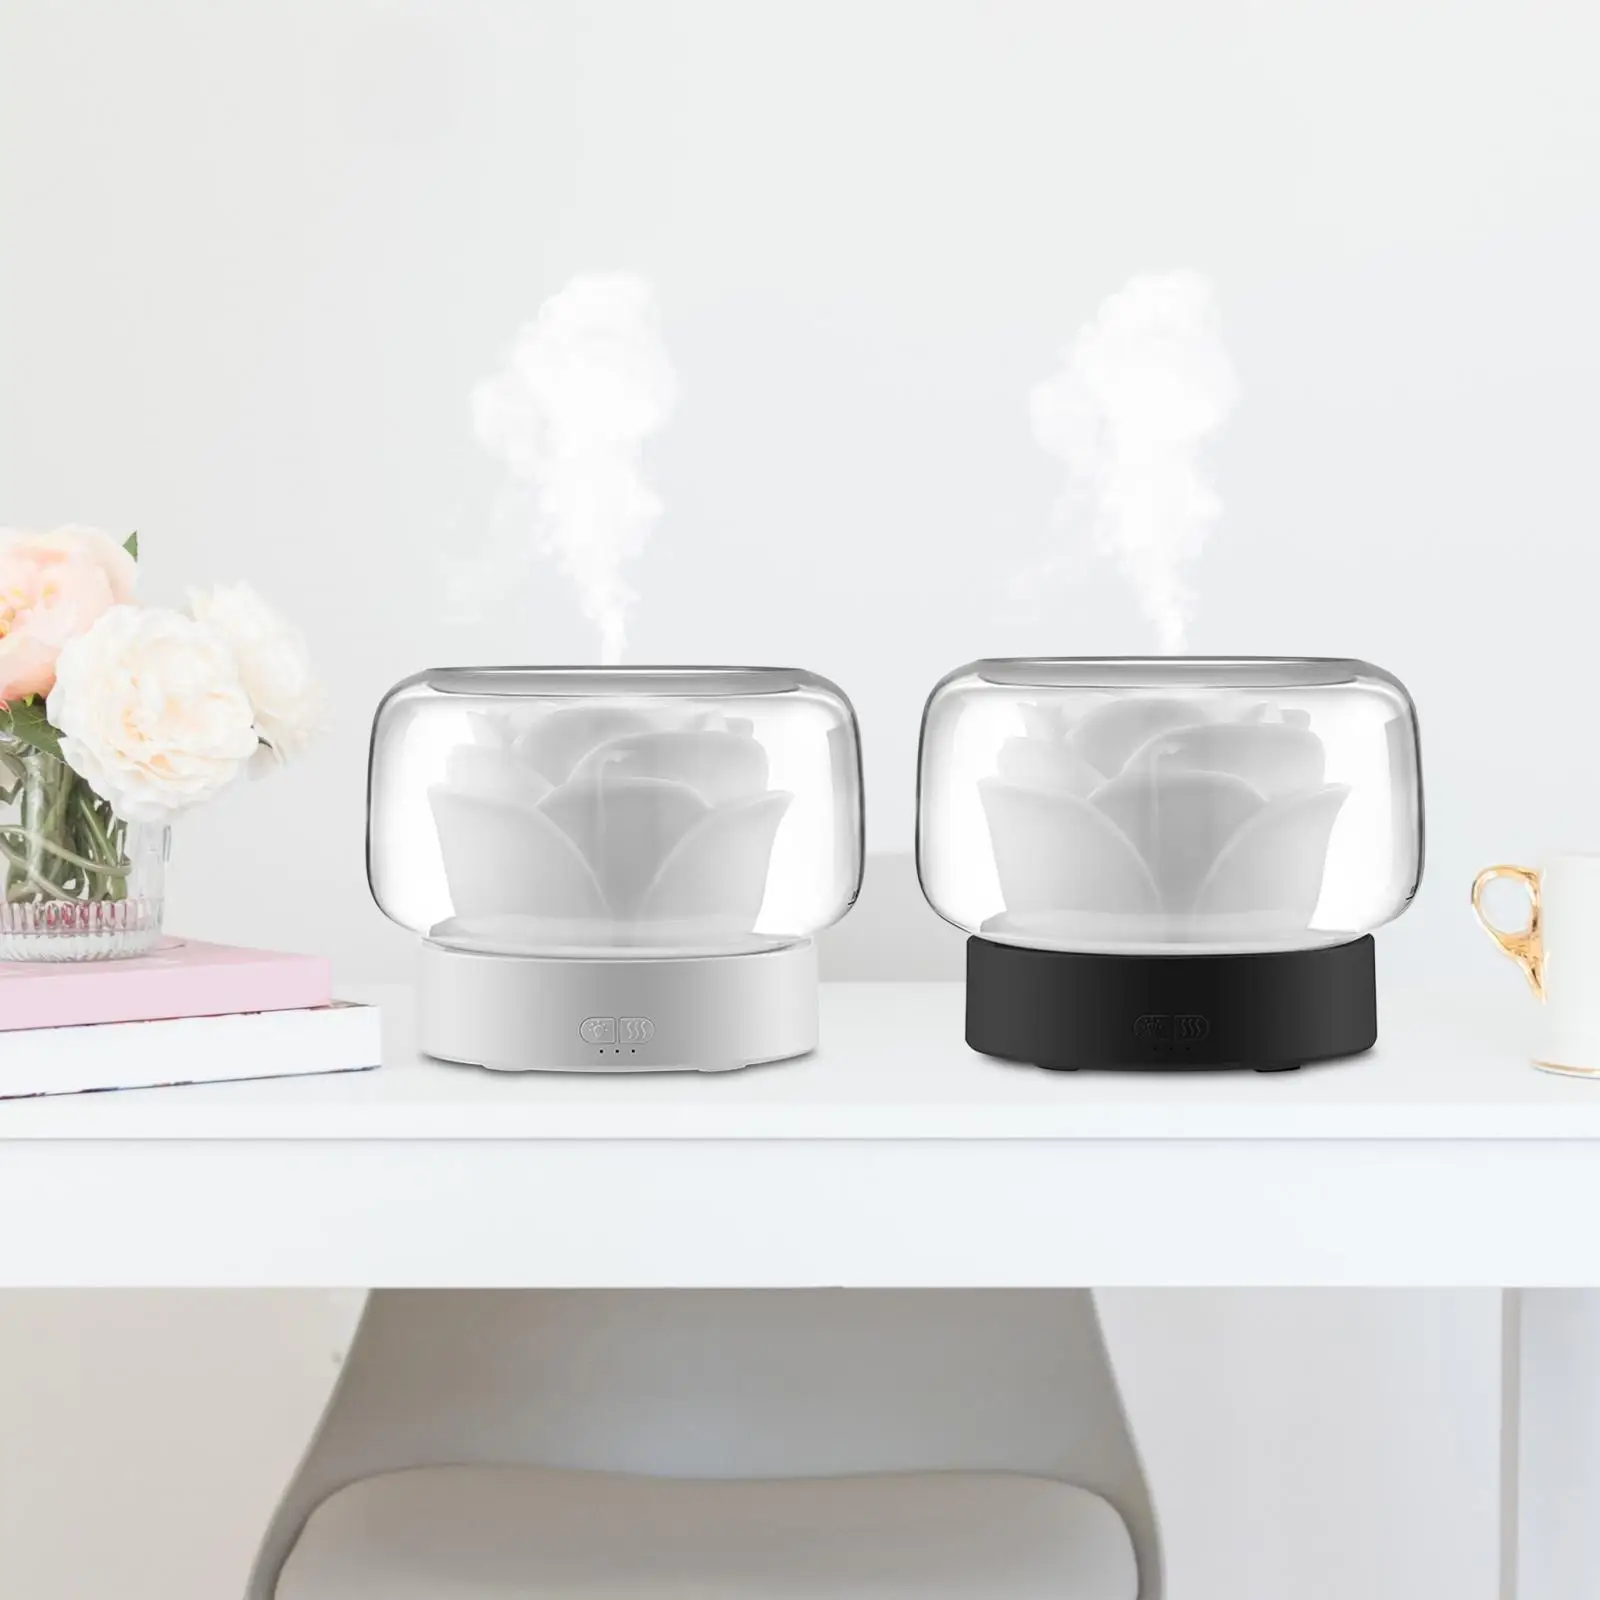 Essential Oil Diffuser Premium Air Humidifier for Yoga Room Home Decor Study